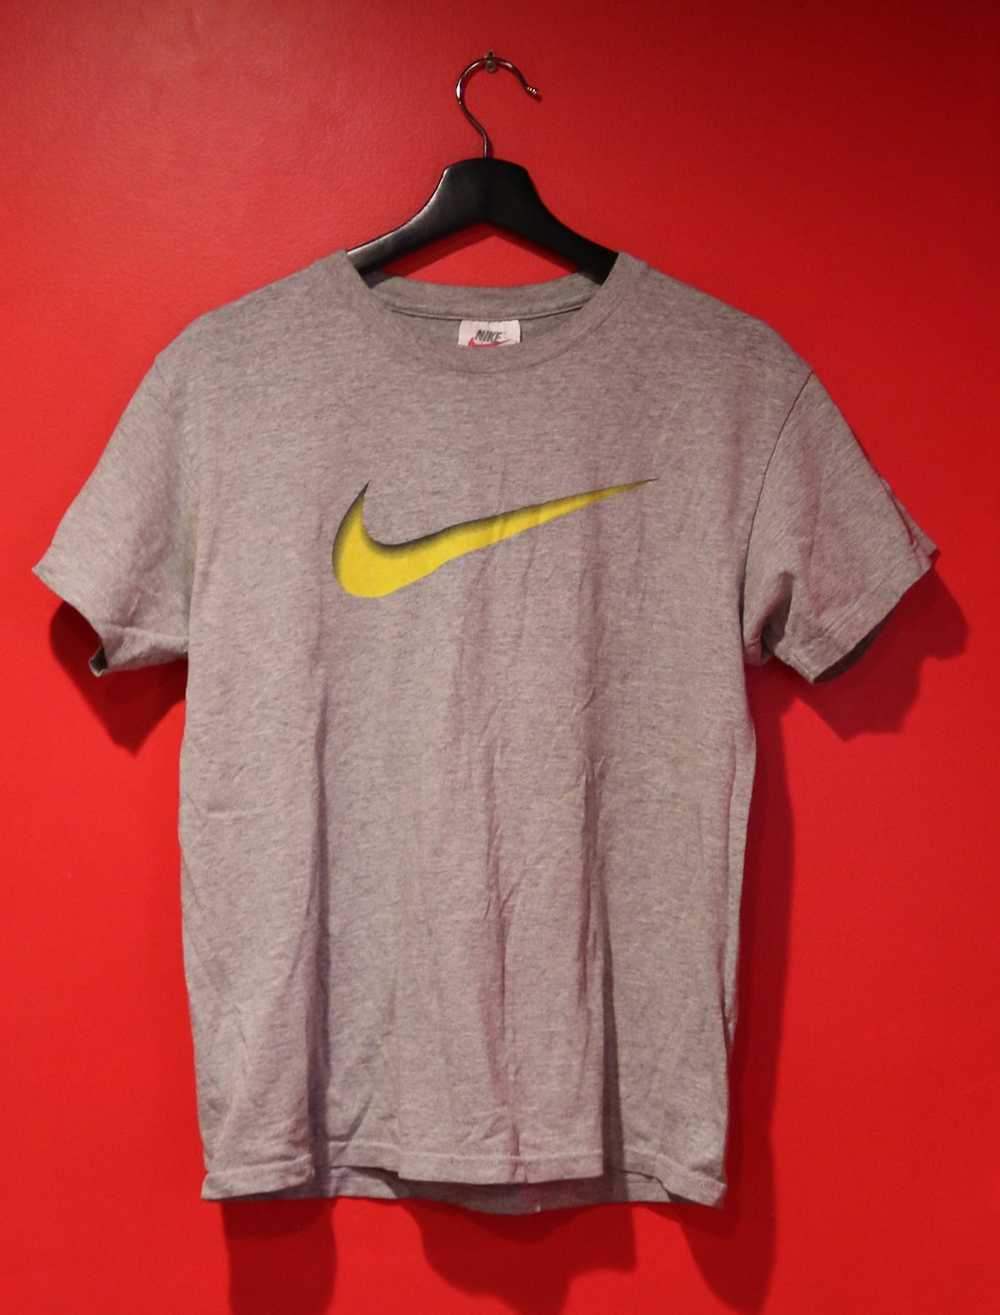 Nike × Vintage Vintage 1990s Nike Shirt - image 1